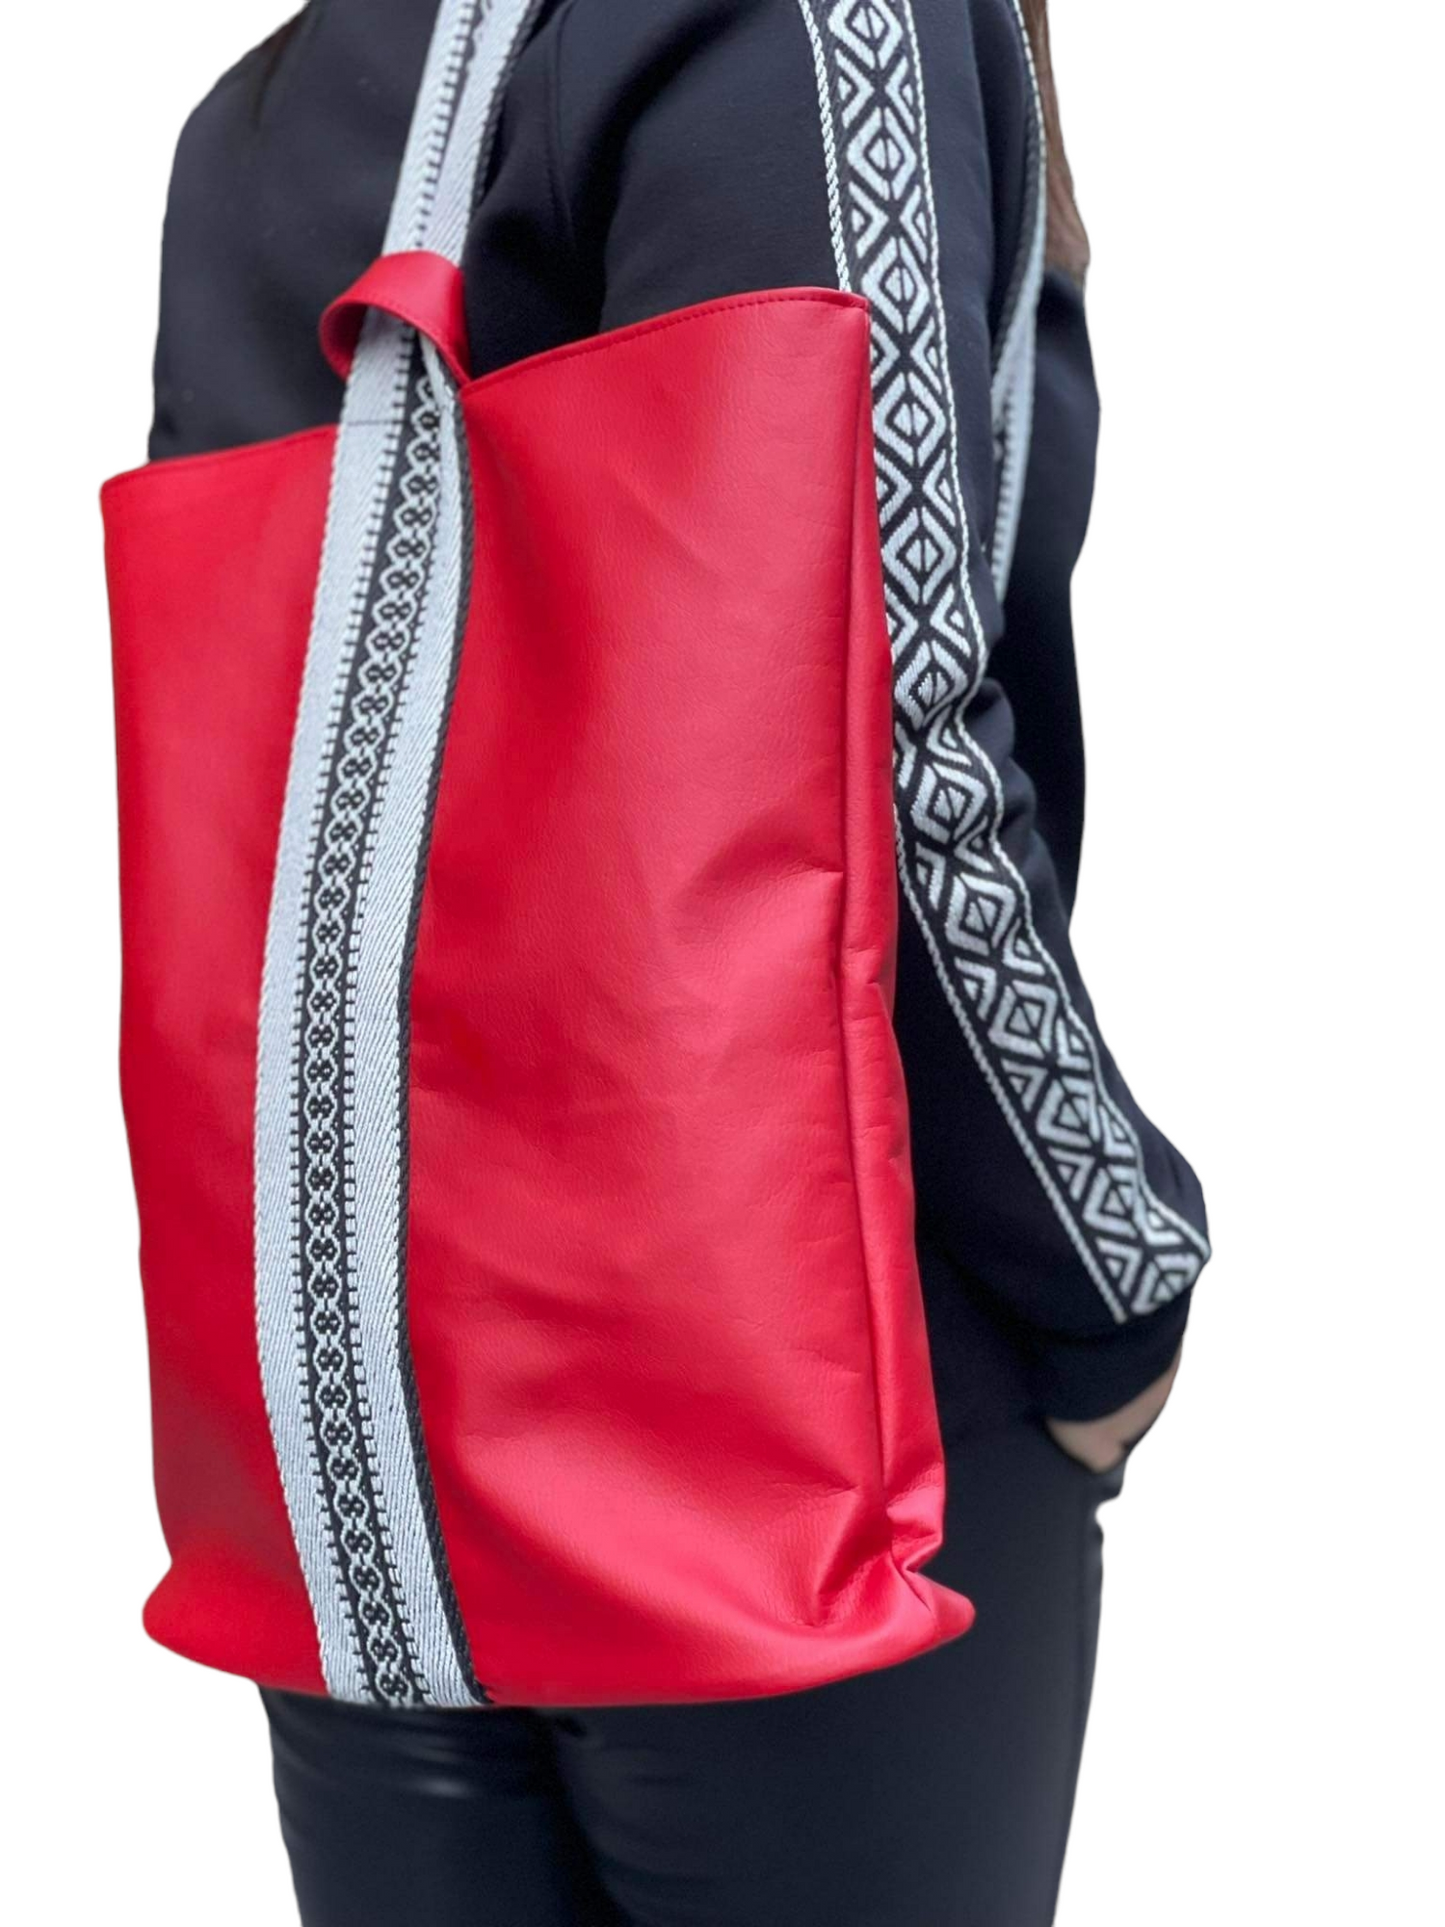 Red Backpack With Sadu Stripe